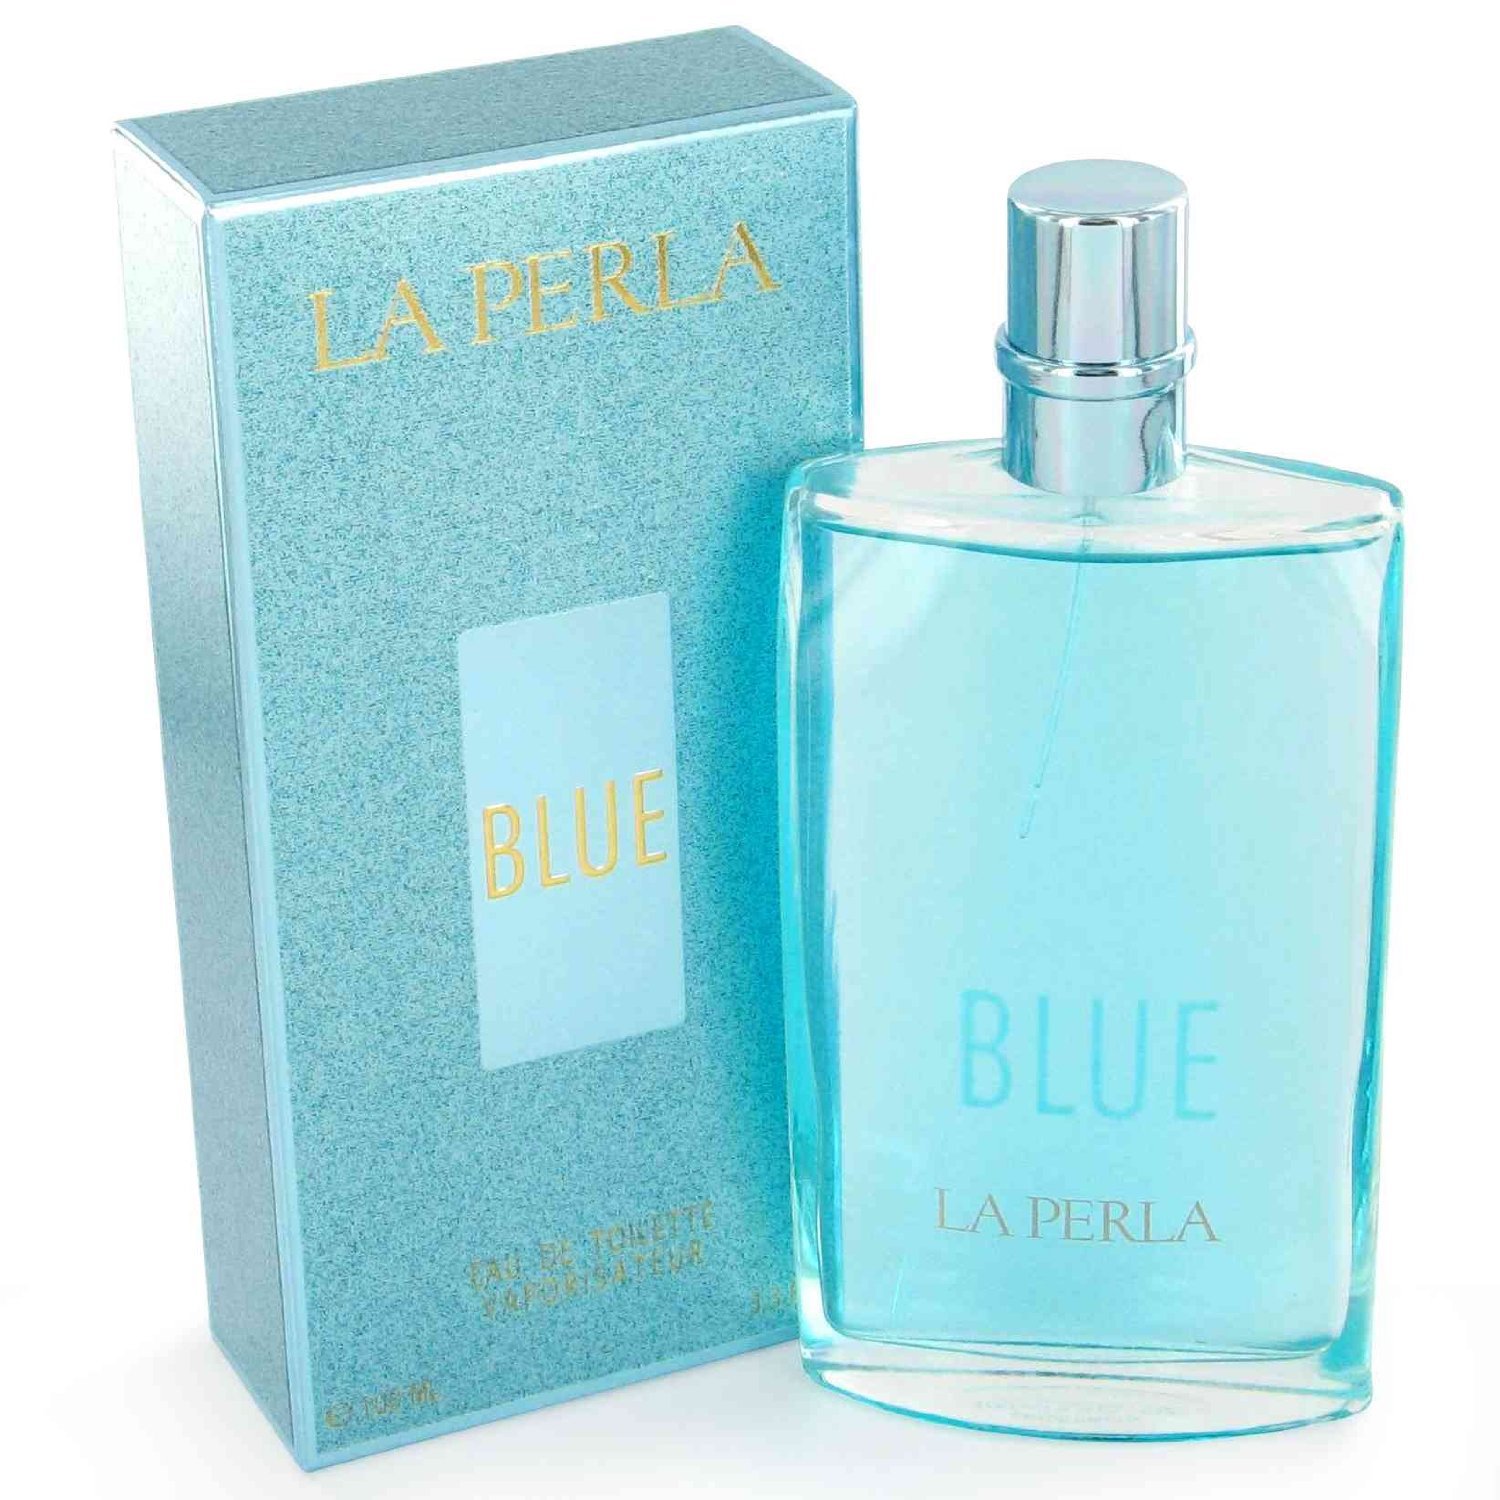 La Perla - Blue (30мл)